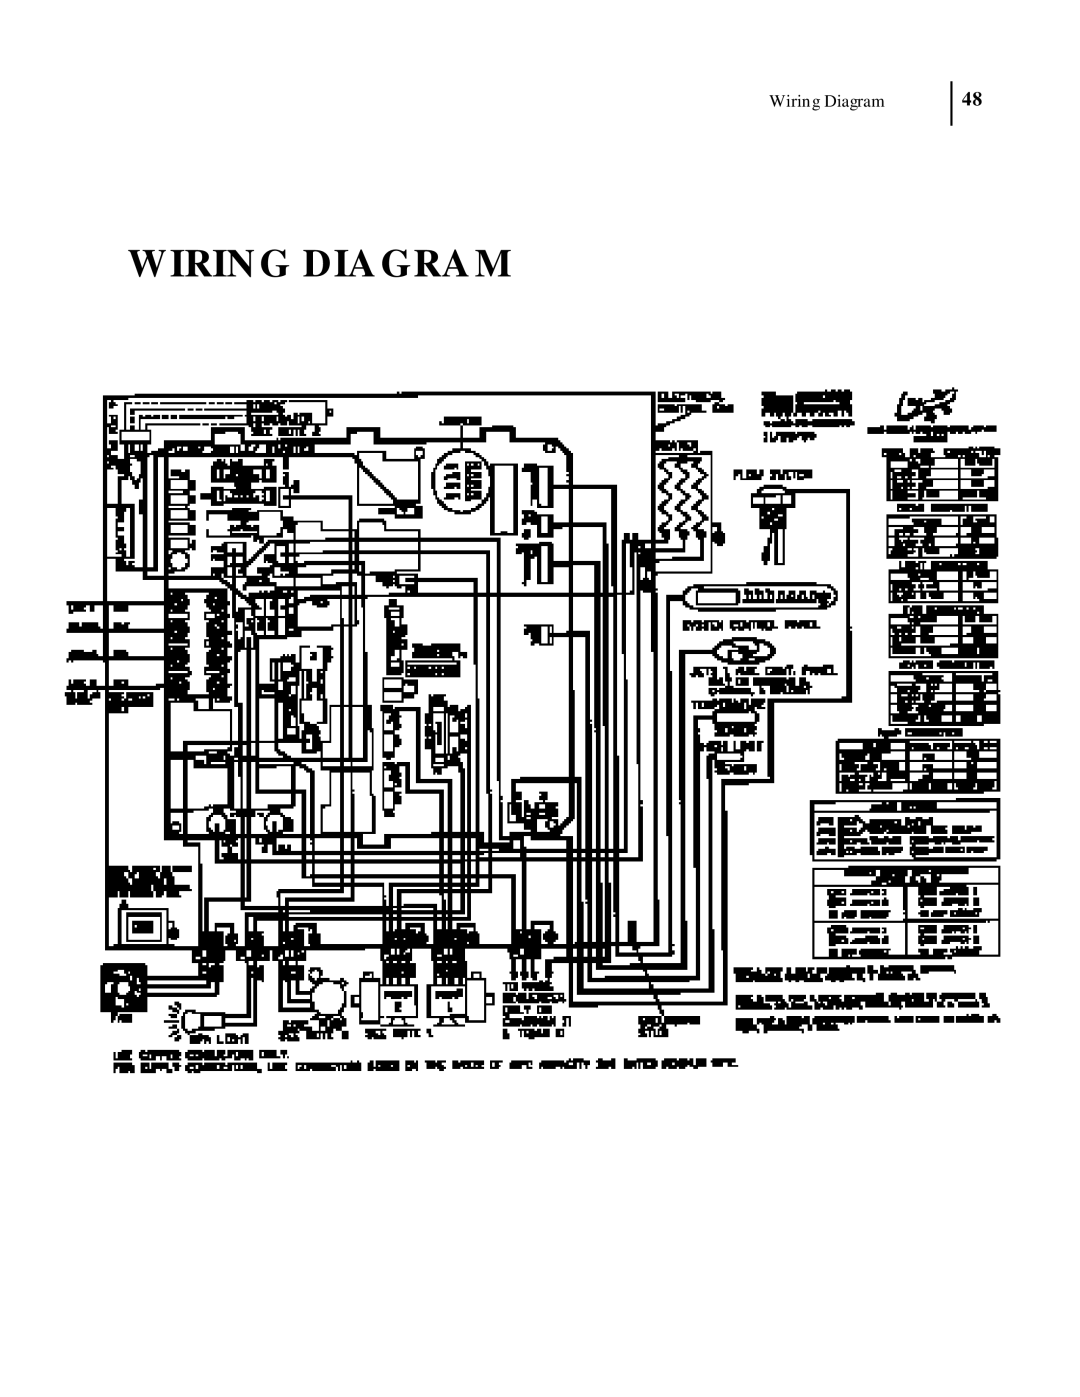 Dimension One Spas 2000 Model manual Wiring Diagram 